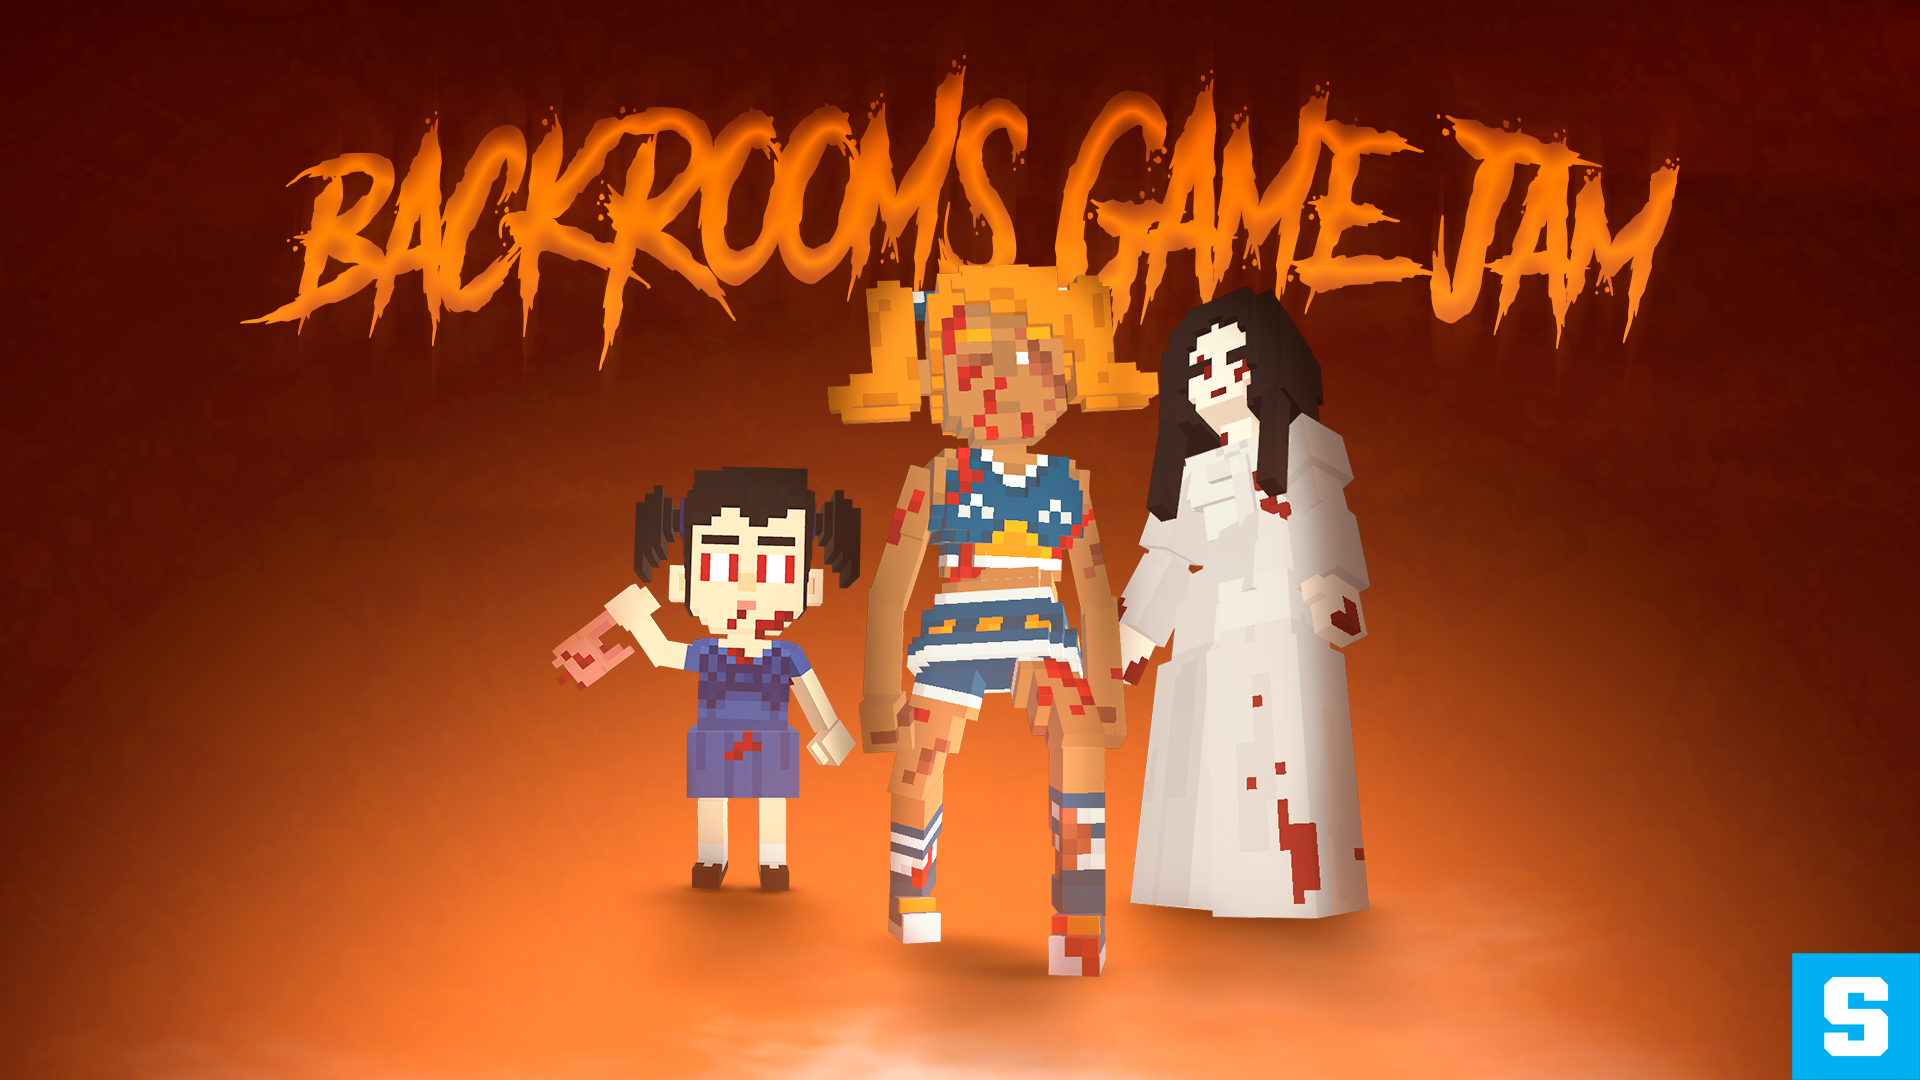 Minecraft Backrooms Showcase 3 